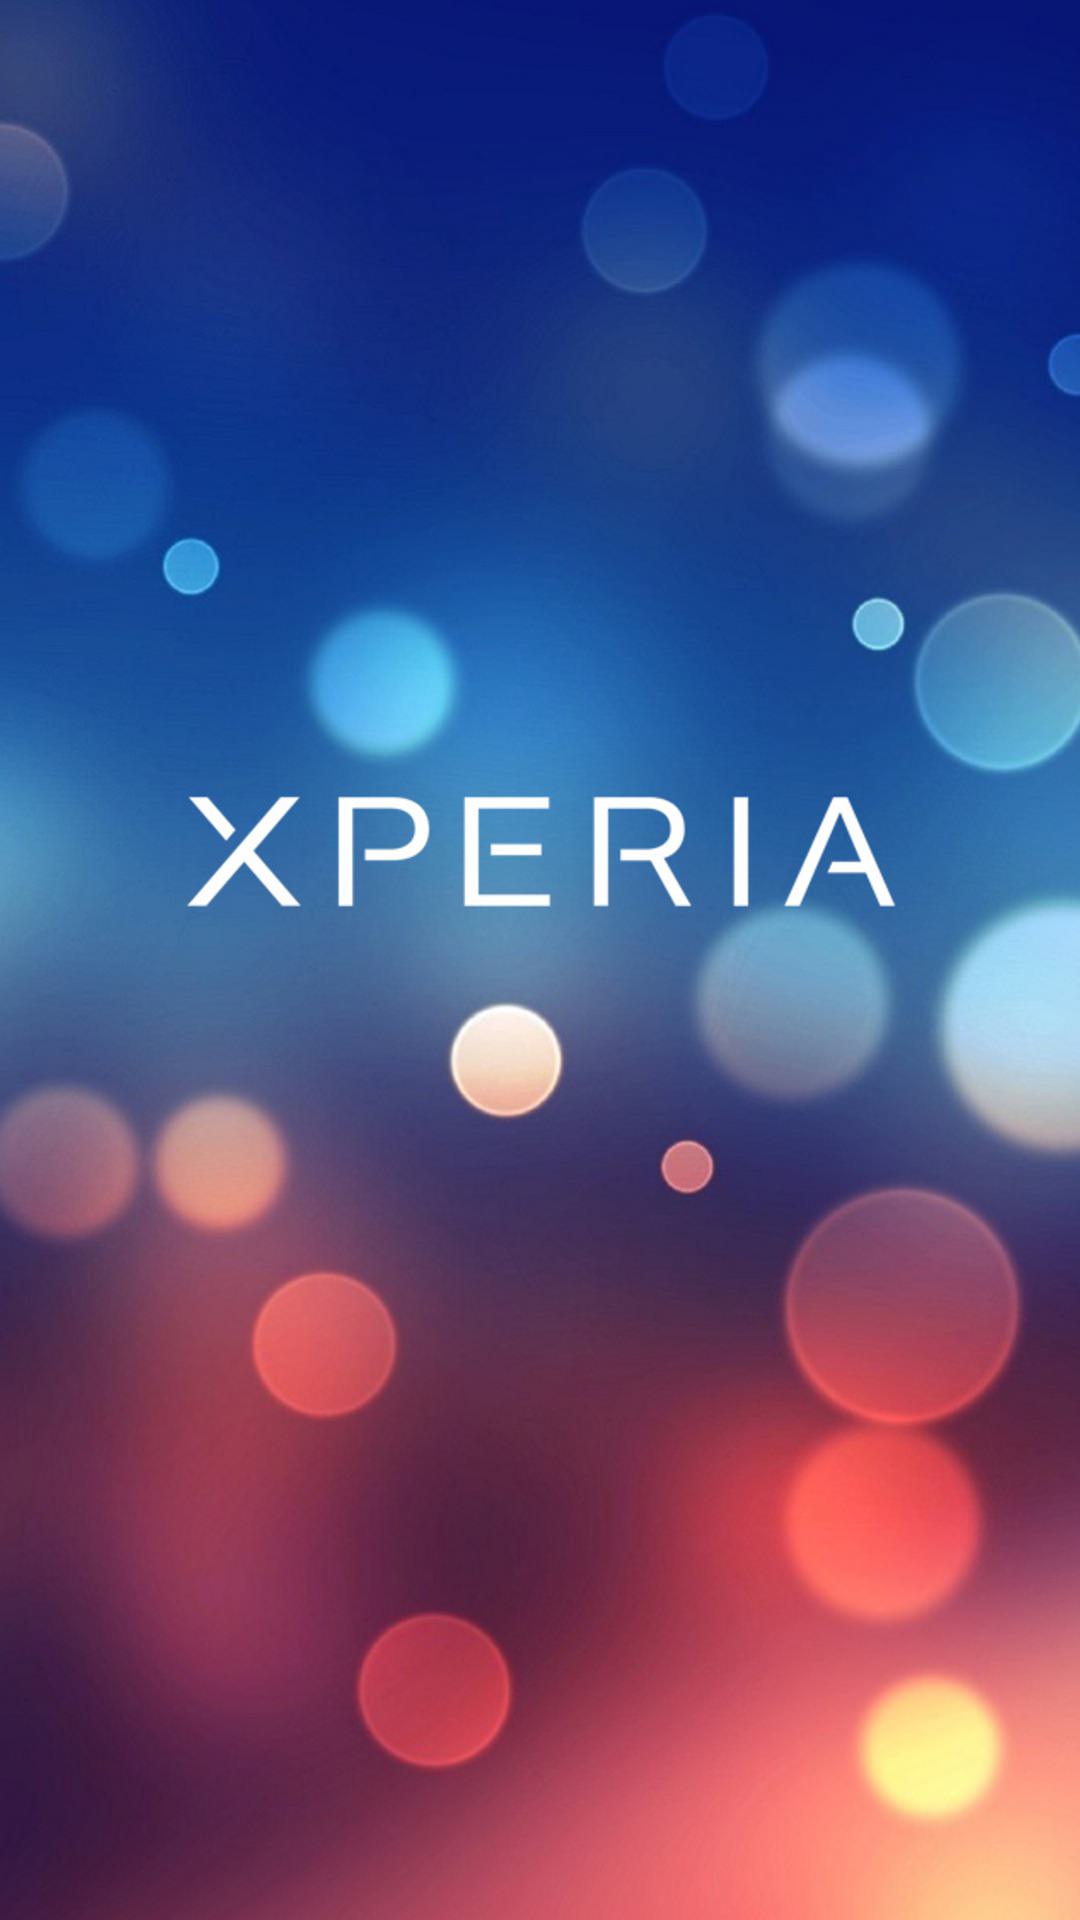 Xperia Logo Wallpaper Sc Smartphone